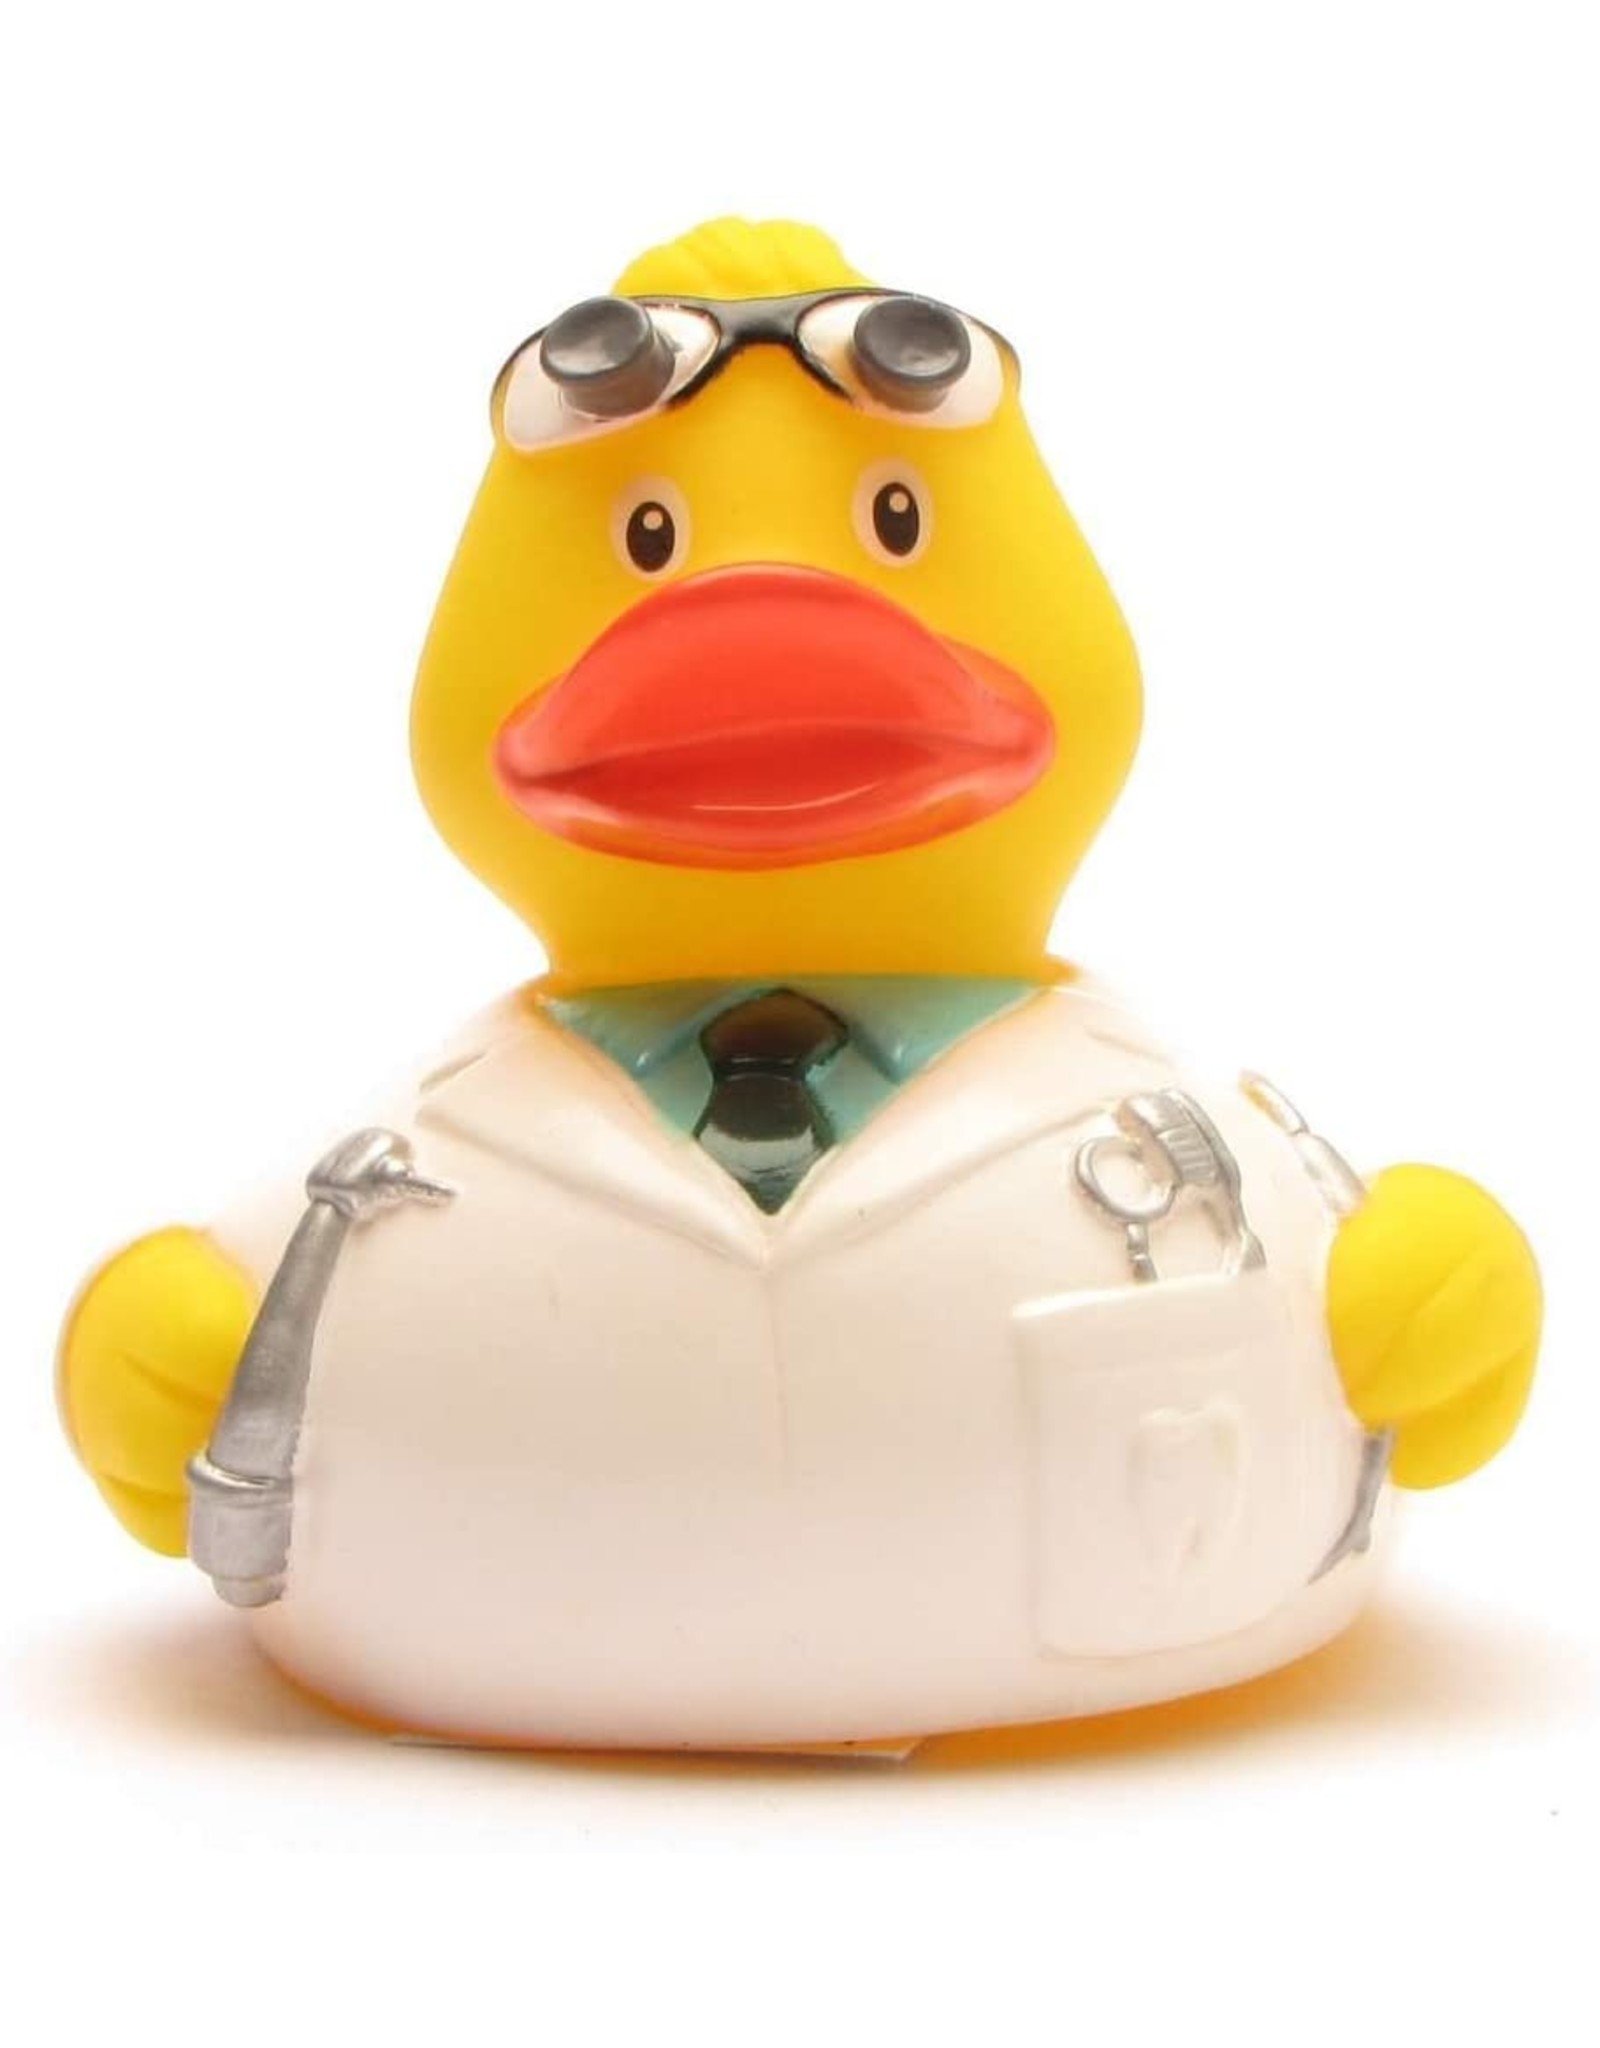 Dentist Rubber Duck